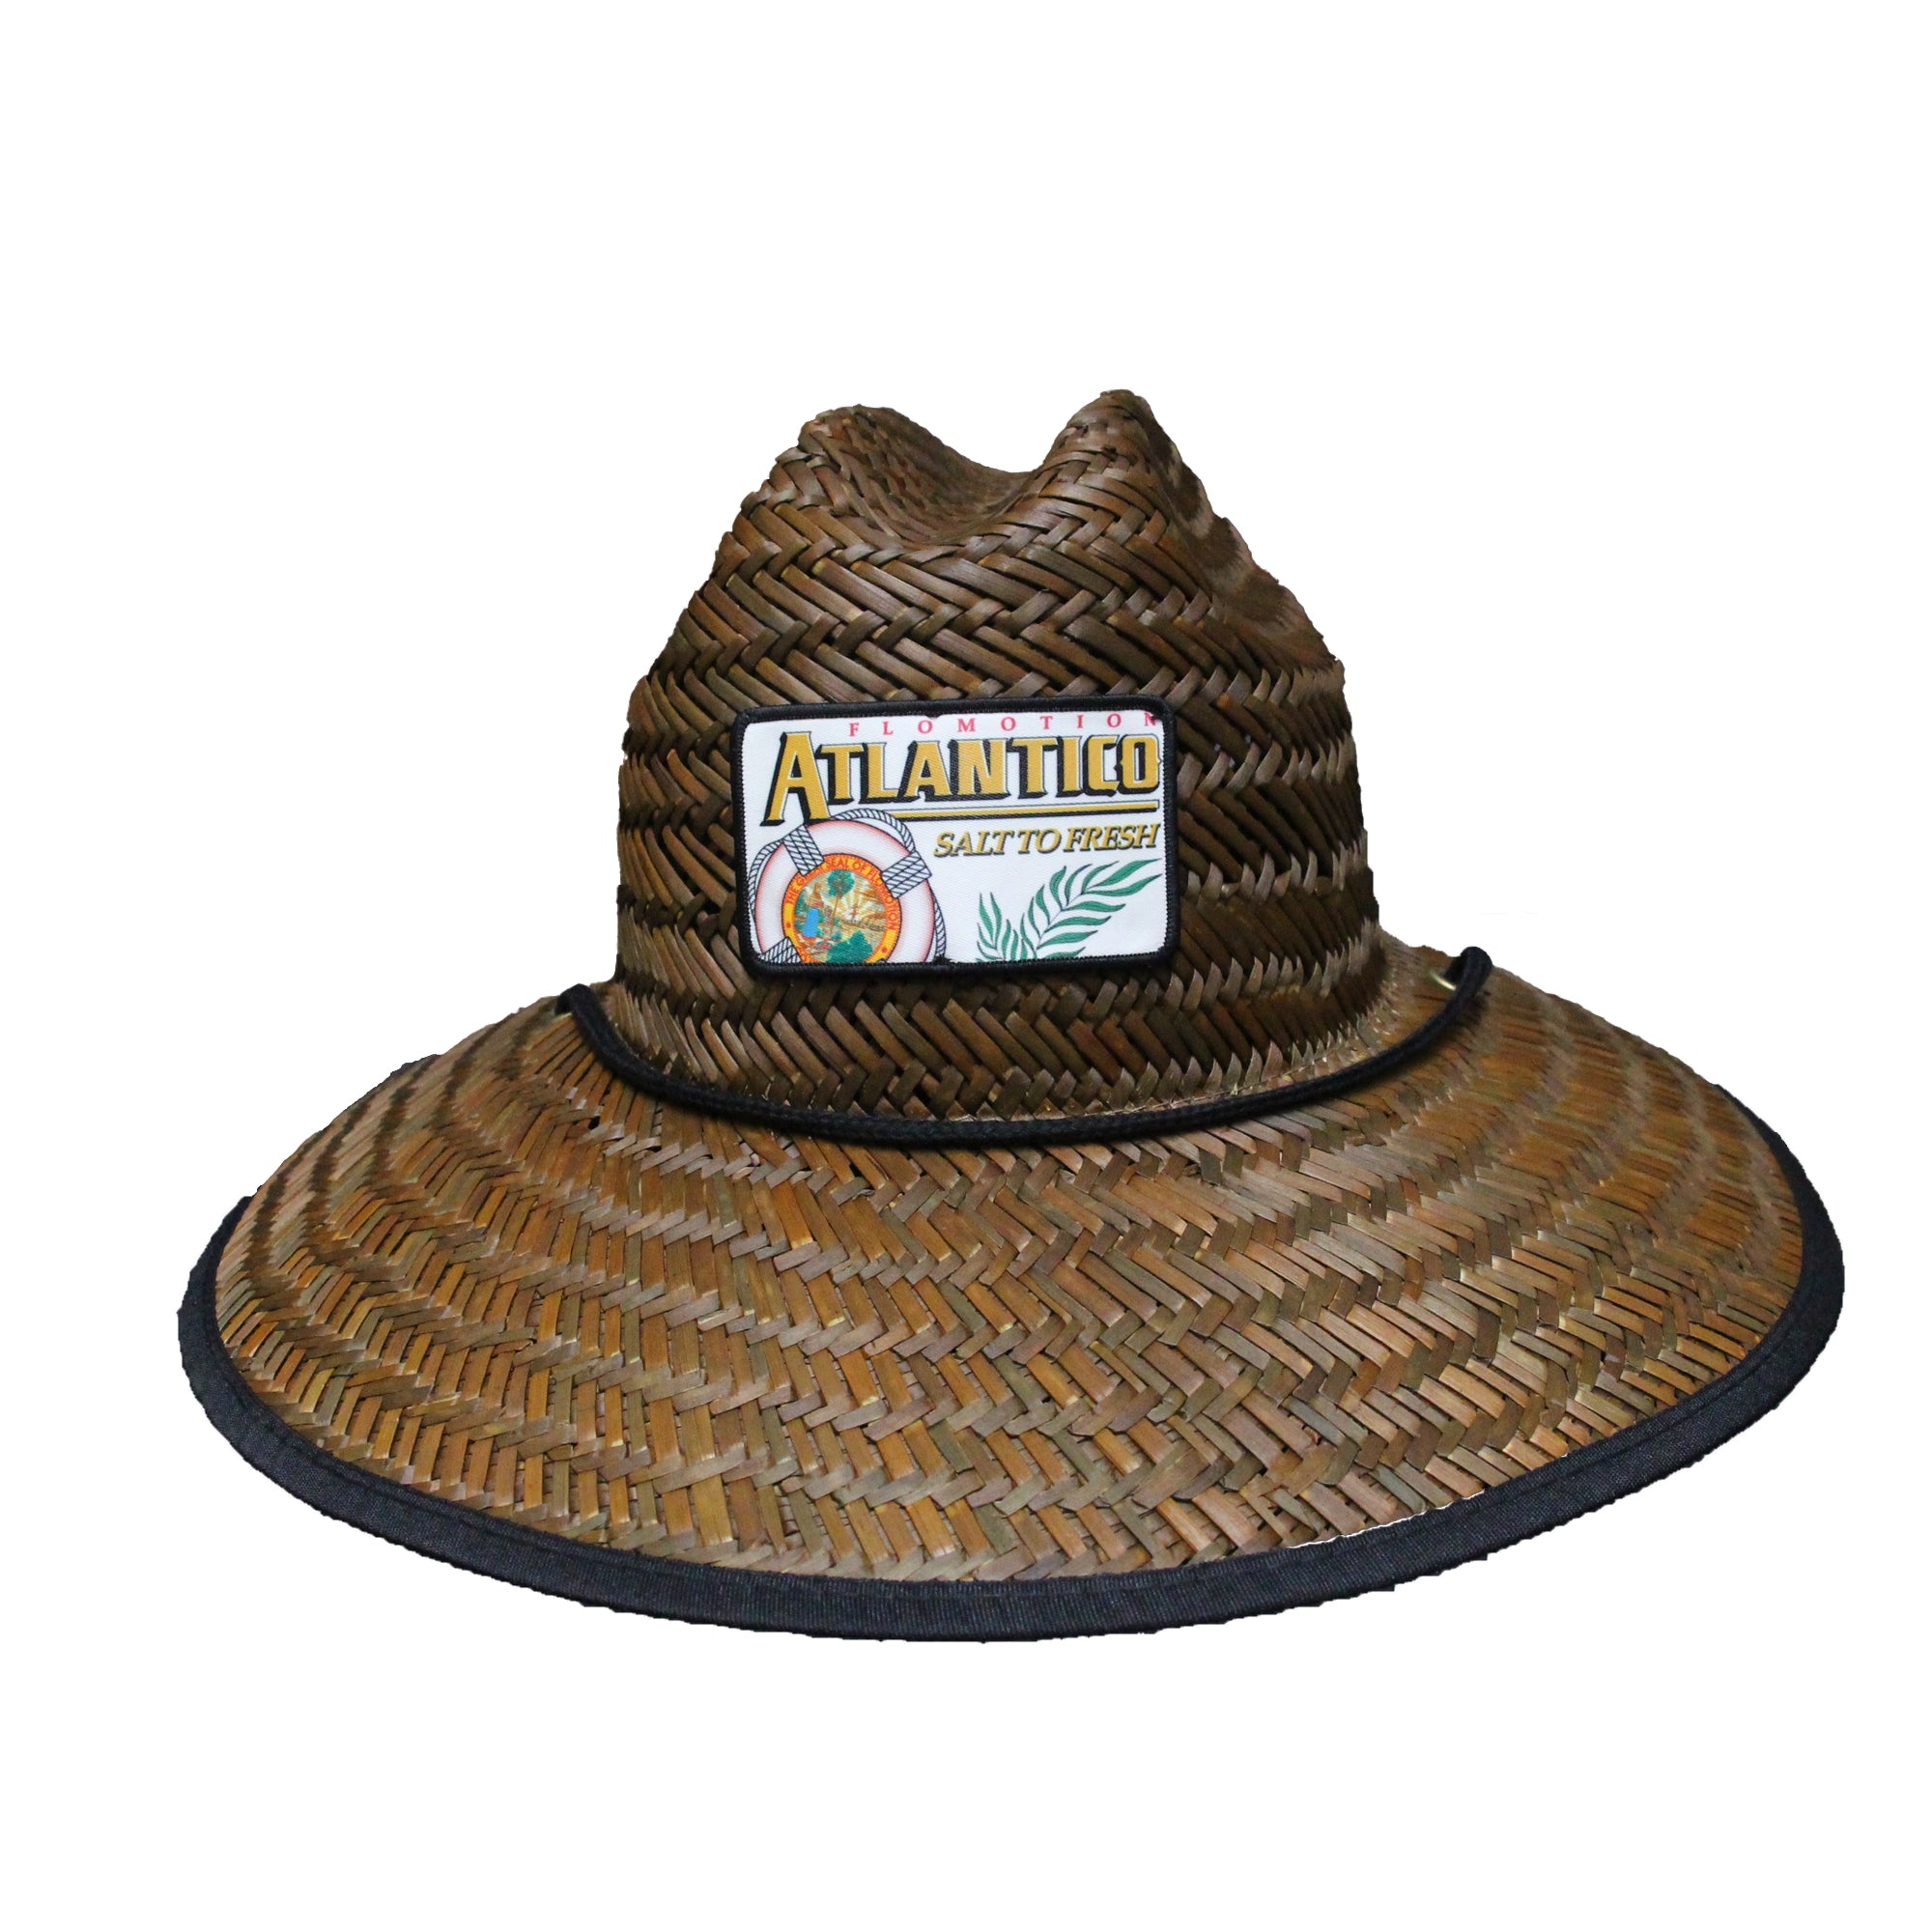 Flomotion Atlantico Men's Straw Hat